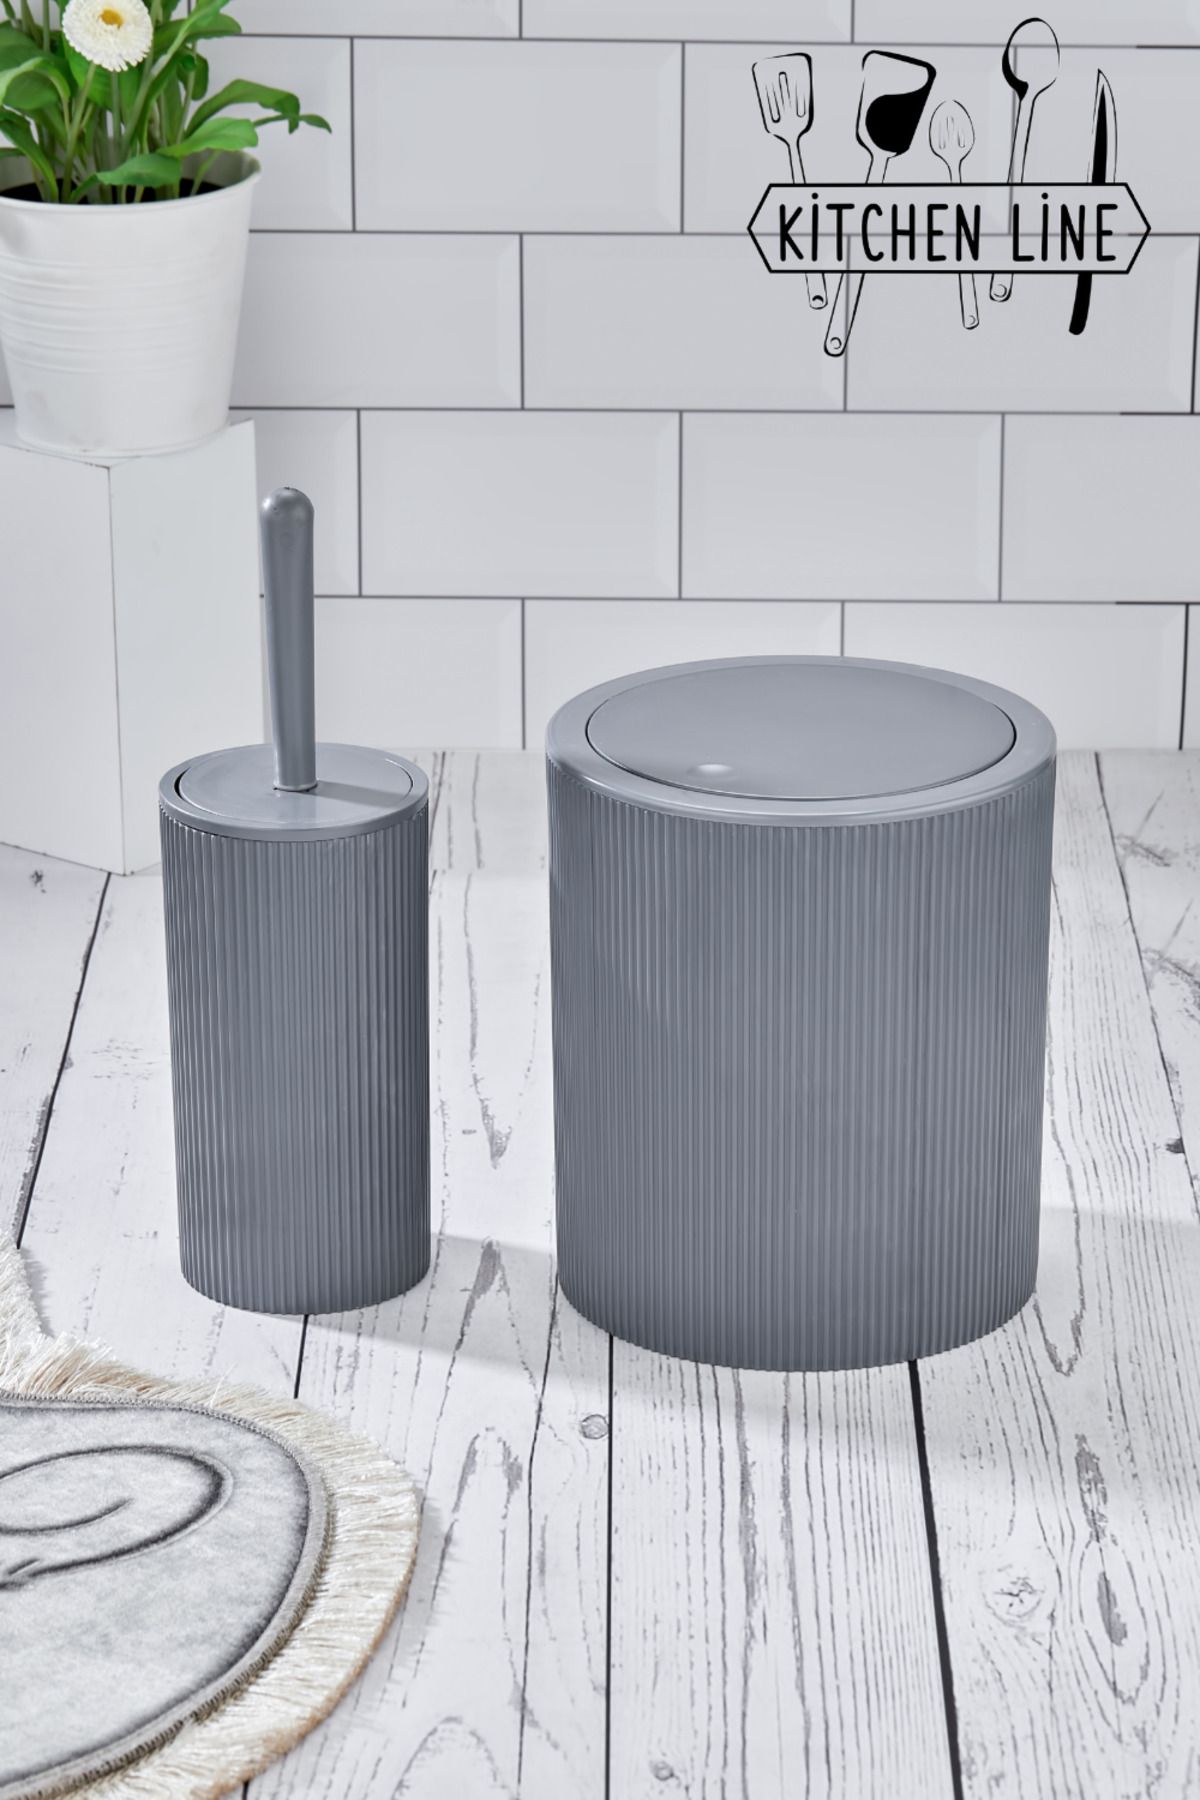 B.A.Y.NUVOLA Yuvarlak Çöp Kovası & Yuvarlak Tuvalet Fırçası Seti Ikili Banyo Seti Gri